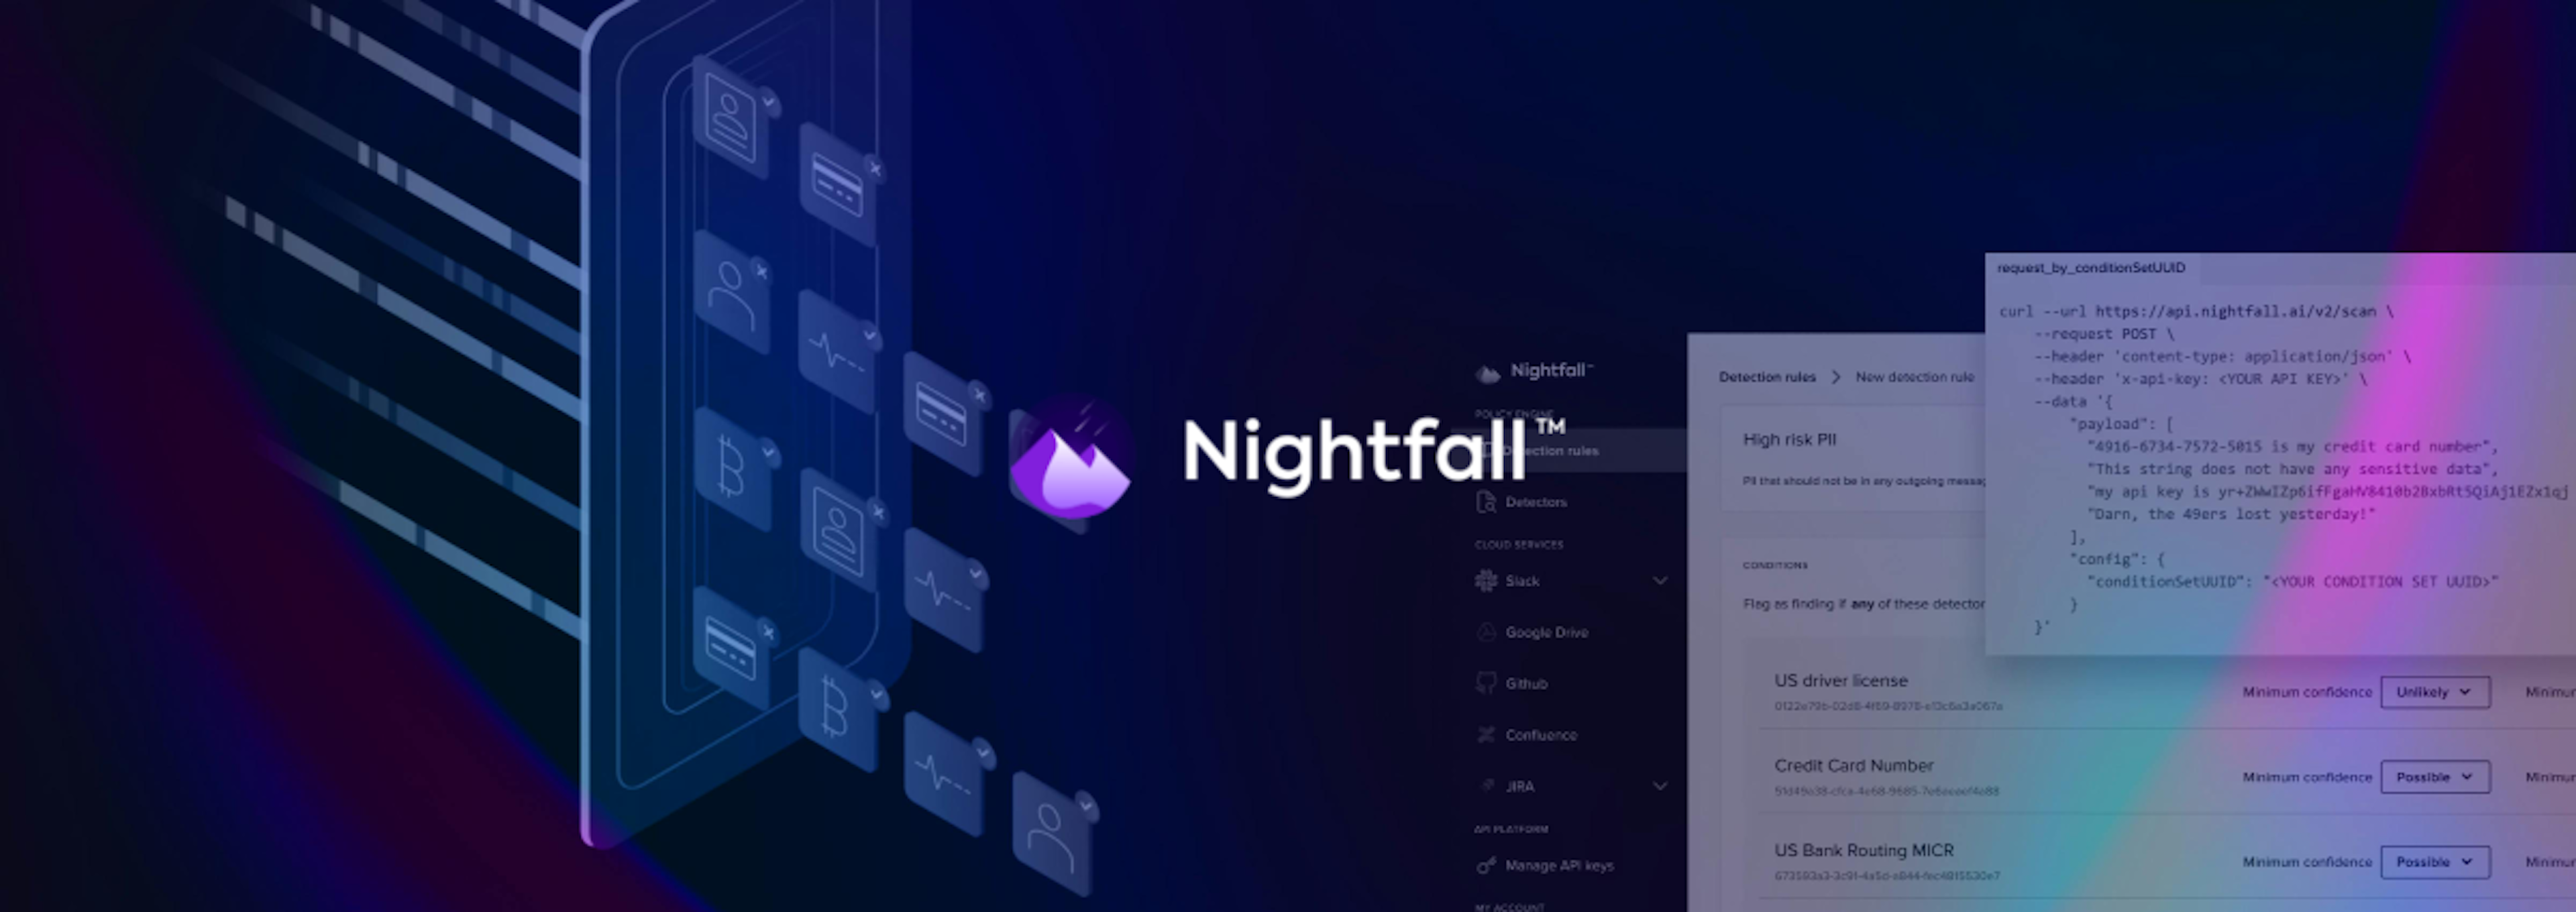 nightwall-thumbnail